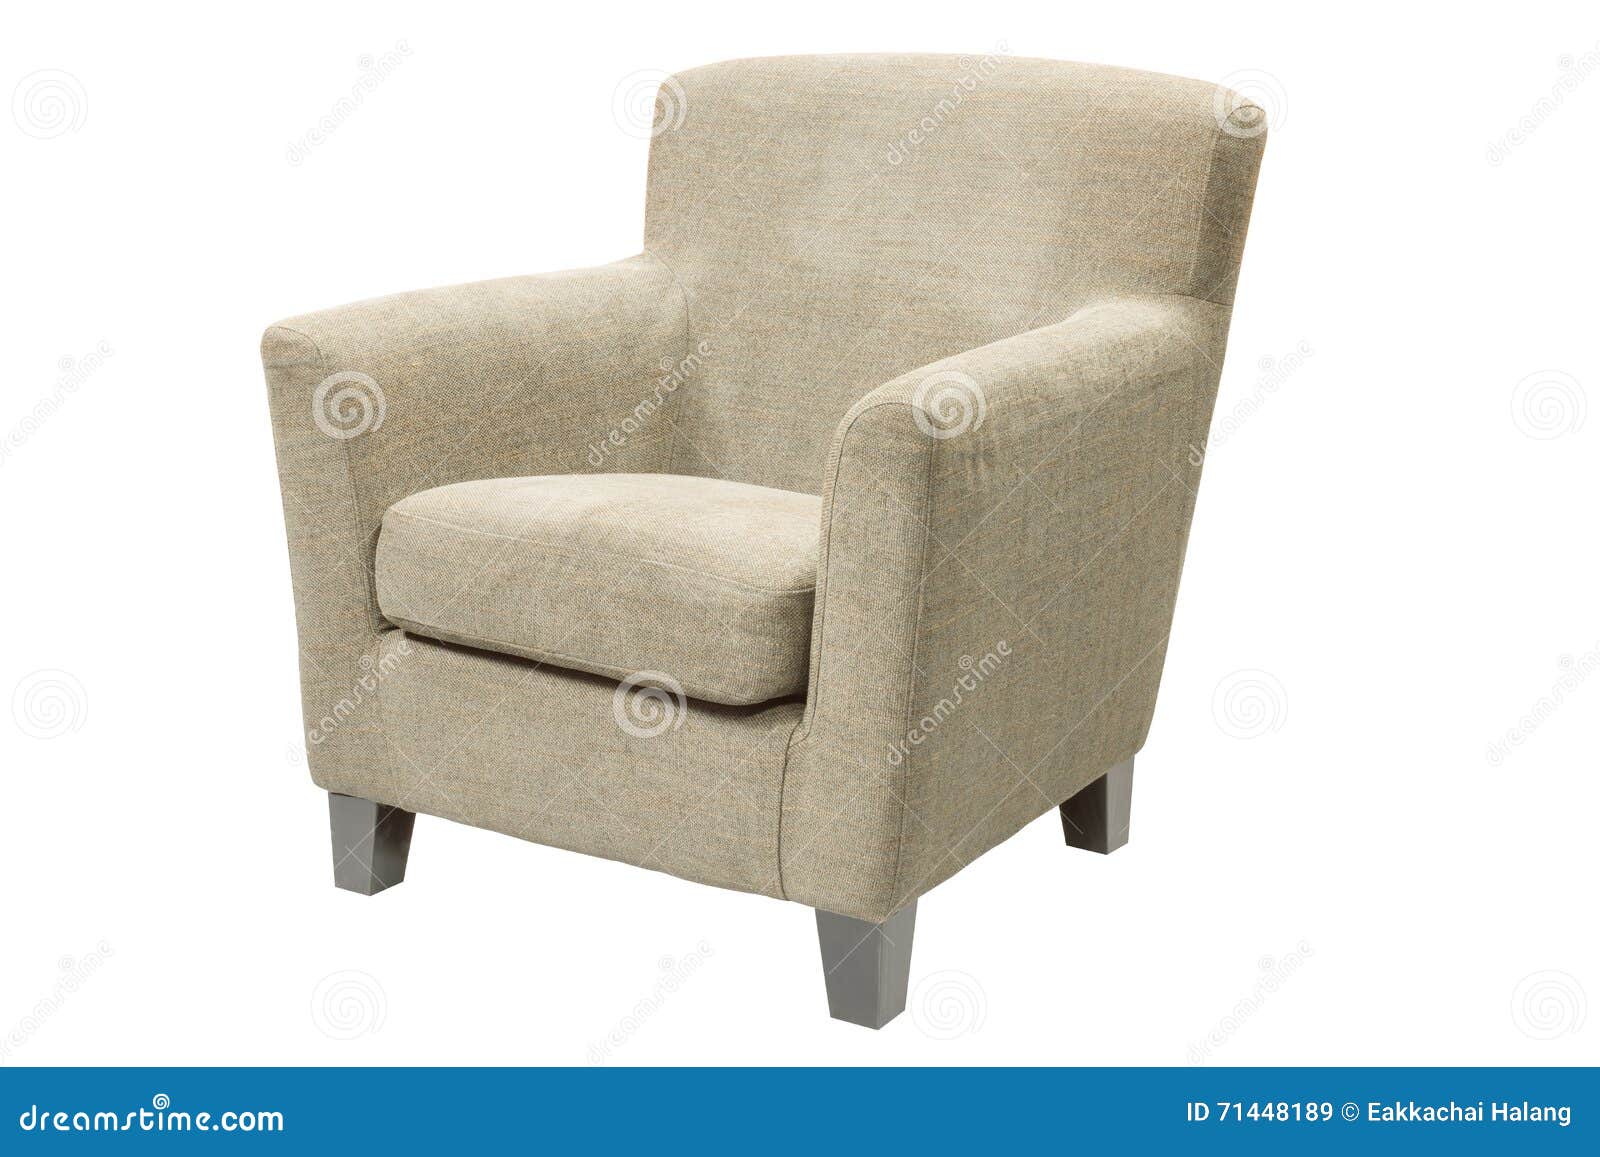 sofa, fabric armchair  on white